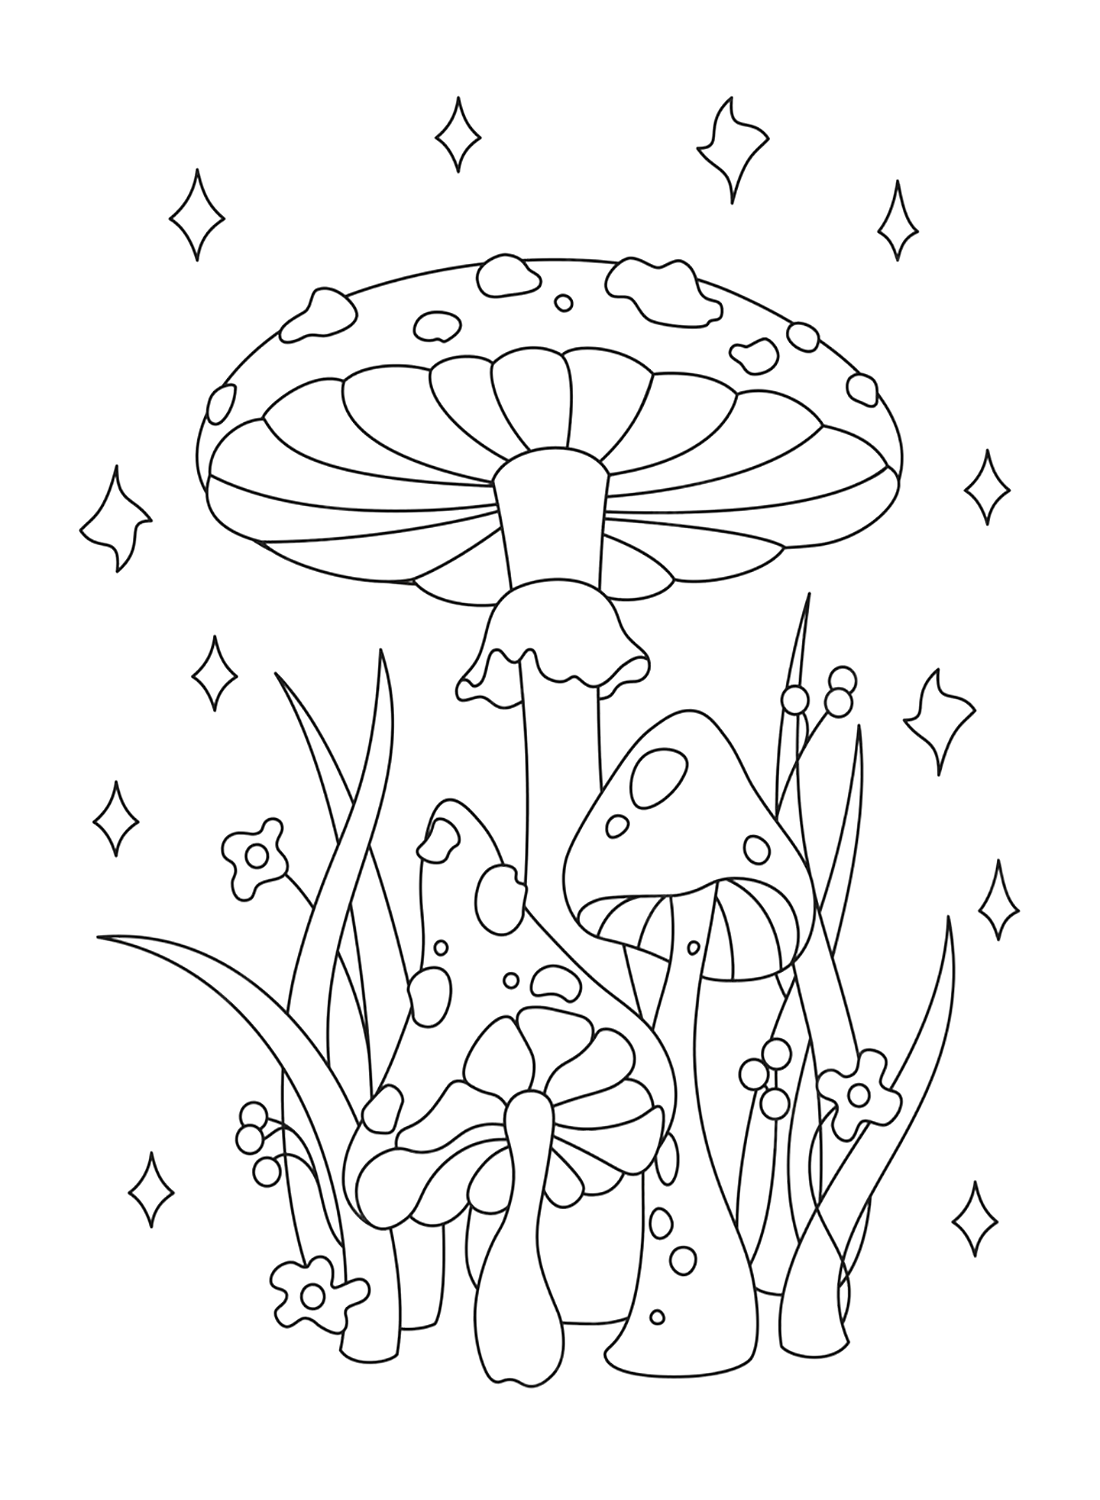 Pagina da colorare di funghi gratuita da funghi